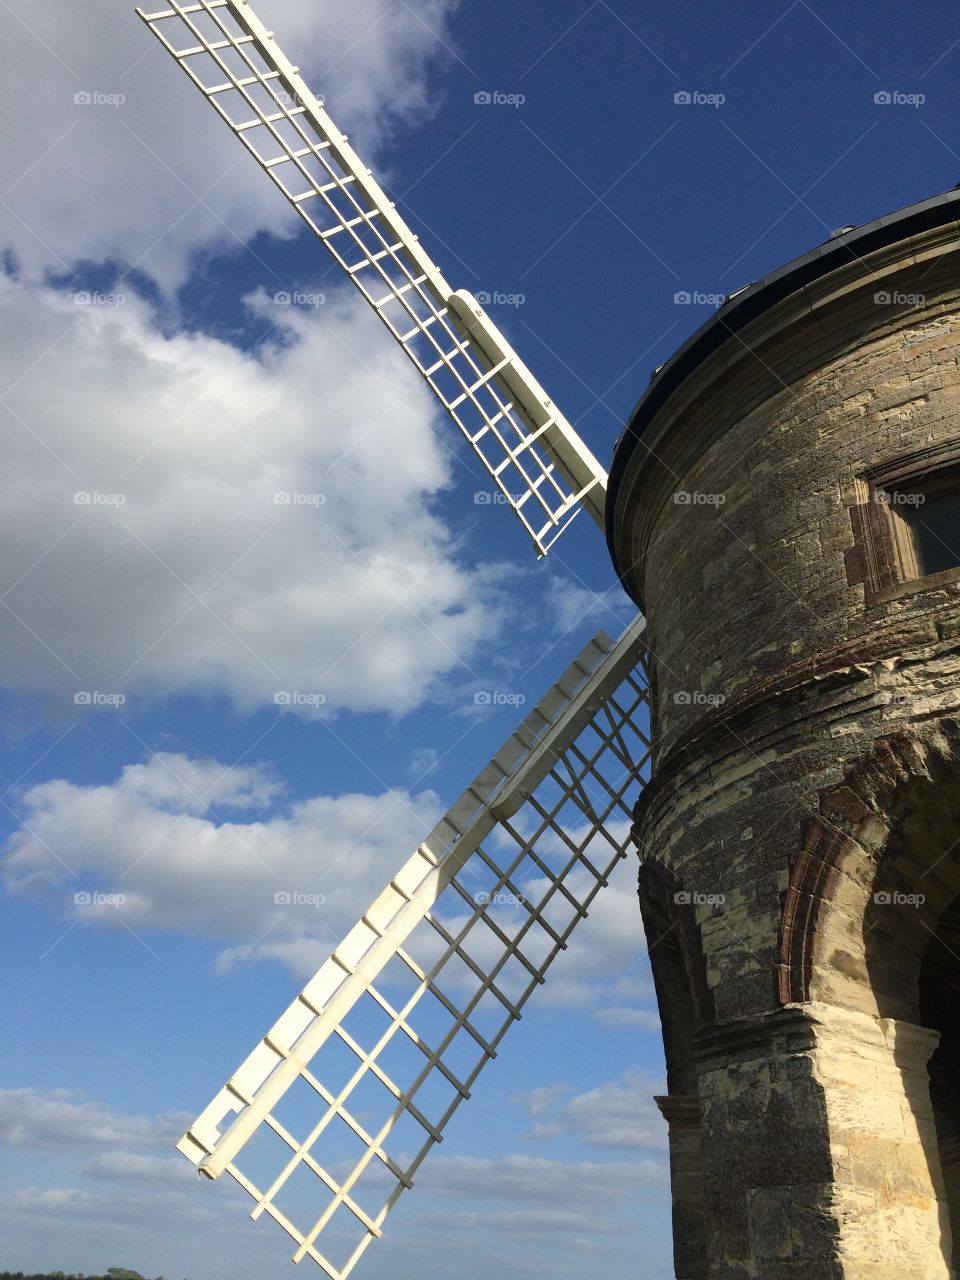 Chesterton windmill 